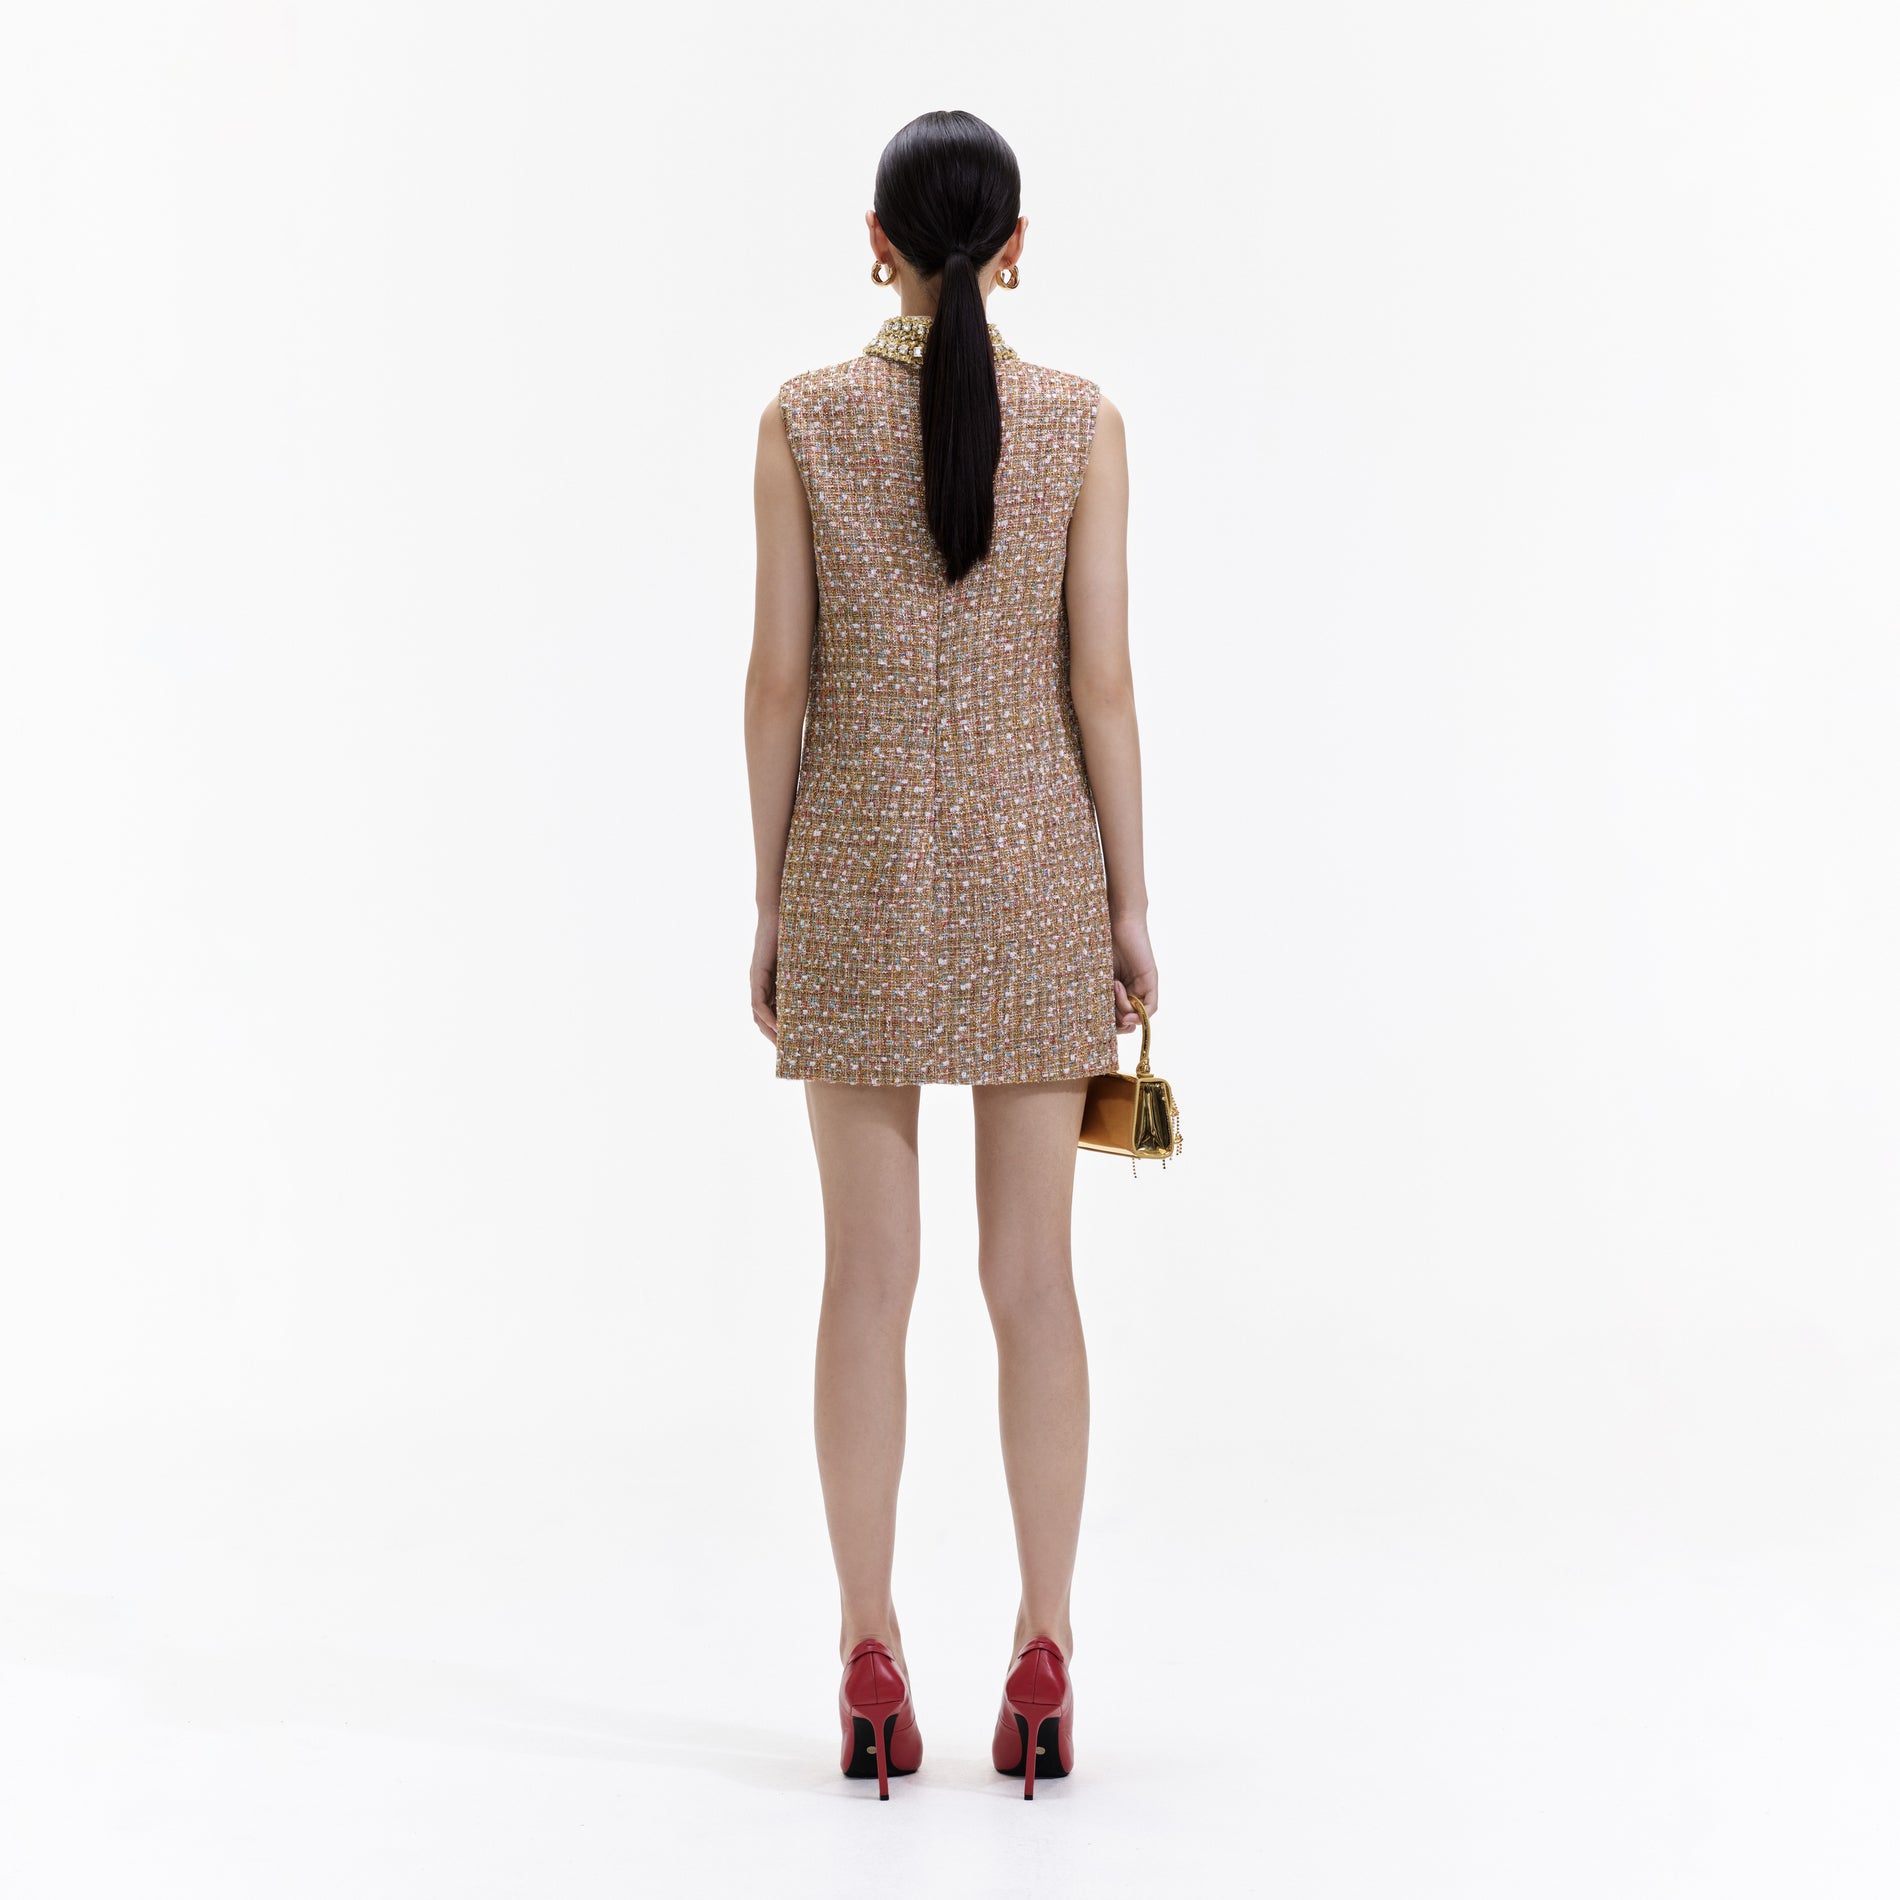 Red Checked bouclé-tweed mini dress, Self-Portrait